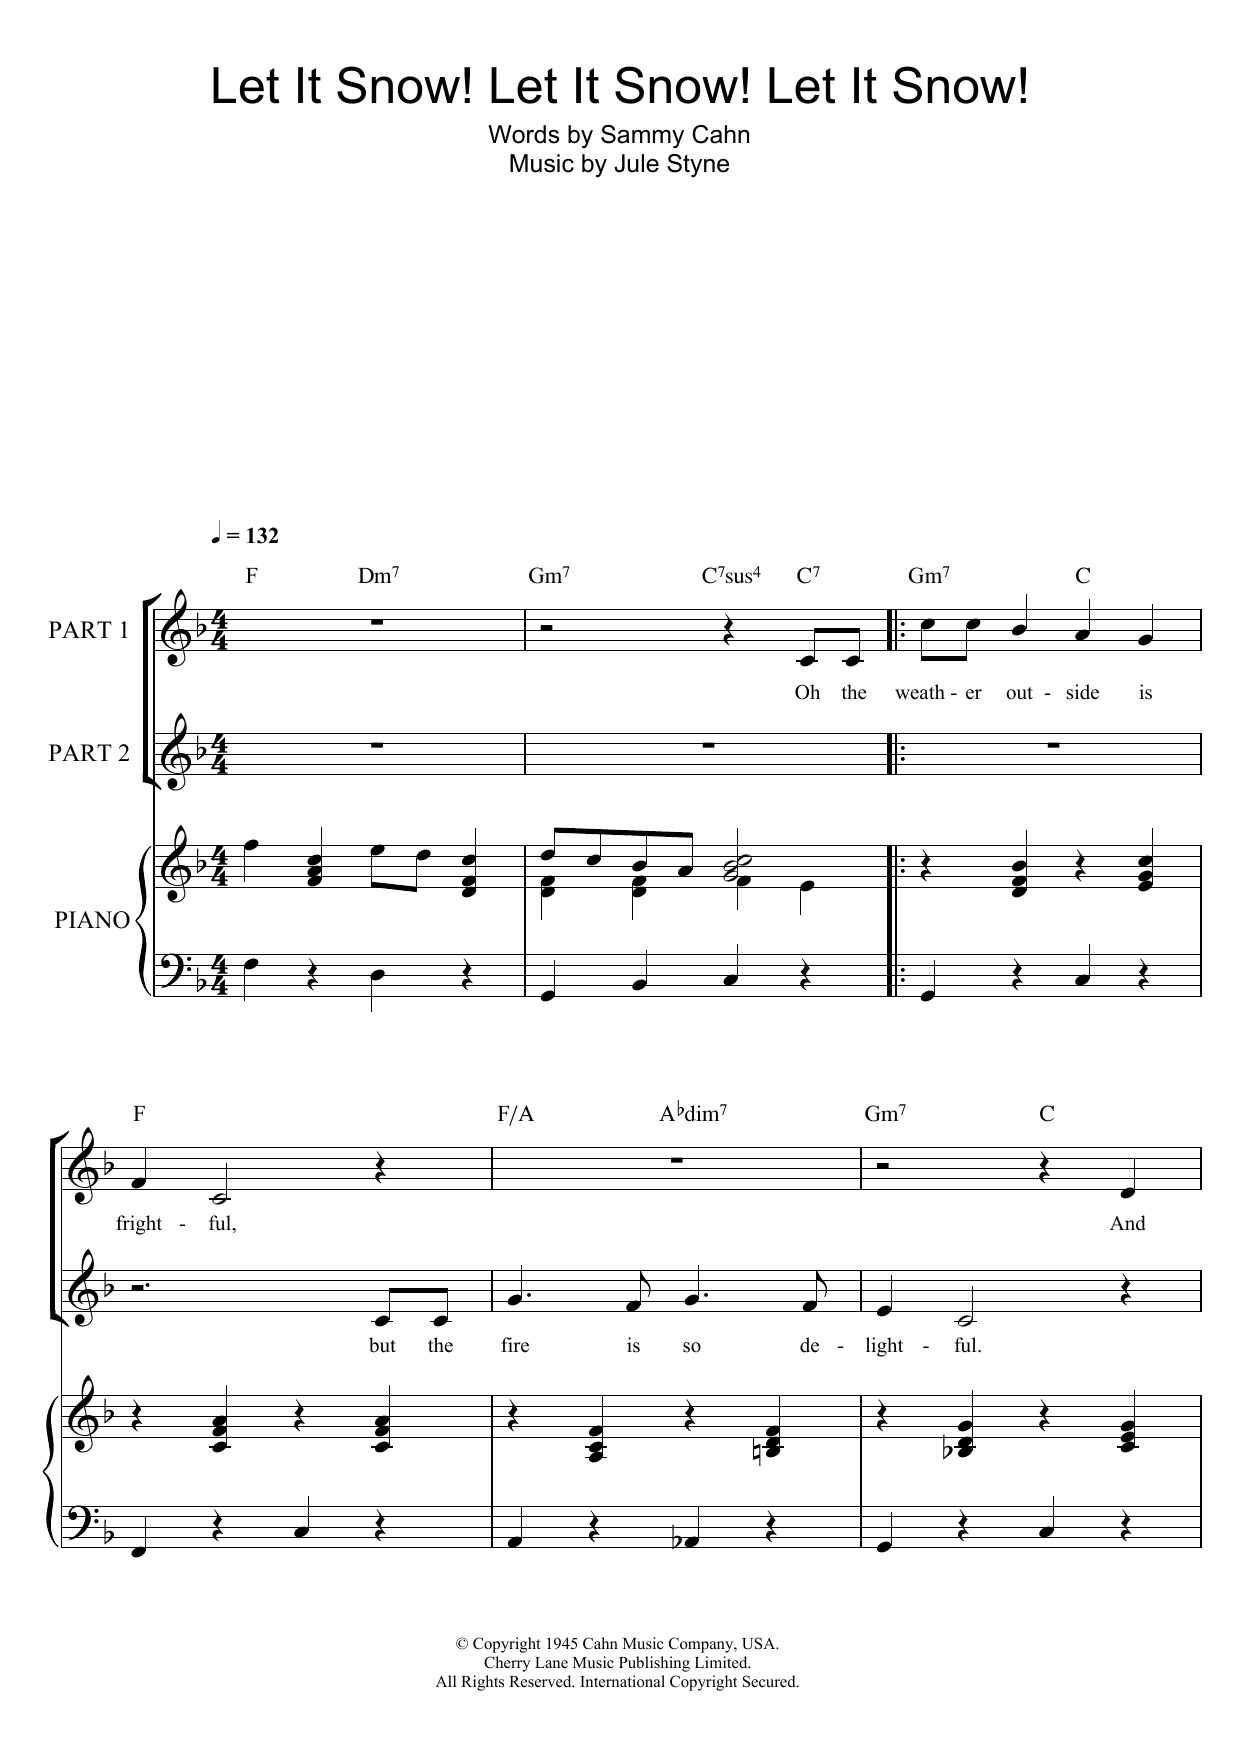 Doris Day Let It Snow! Let It Snow! Let It Snow! (arr. Rick Hein) Sheet Music Notes & Chords for 2-Part Choir - Download or Print PDF